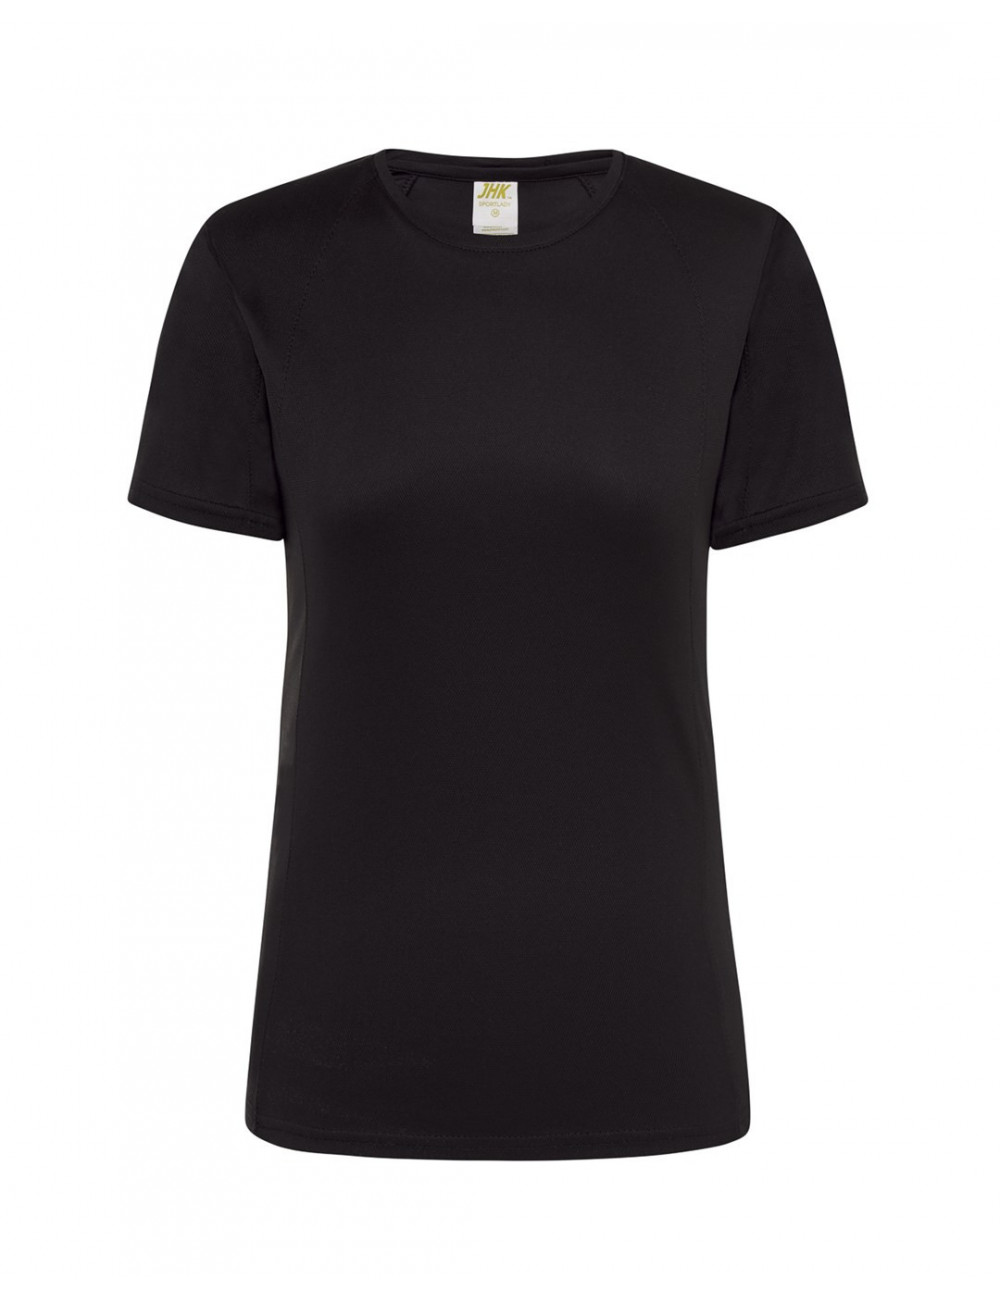 Women`s t-shirt sport lady black Jhk